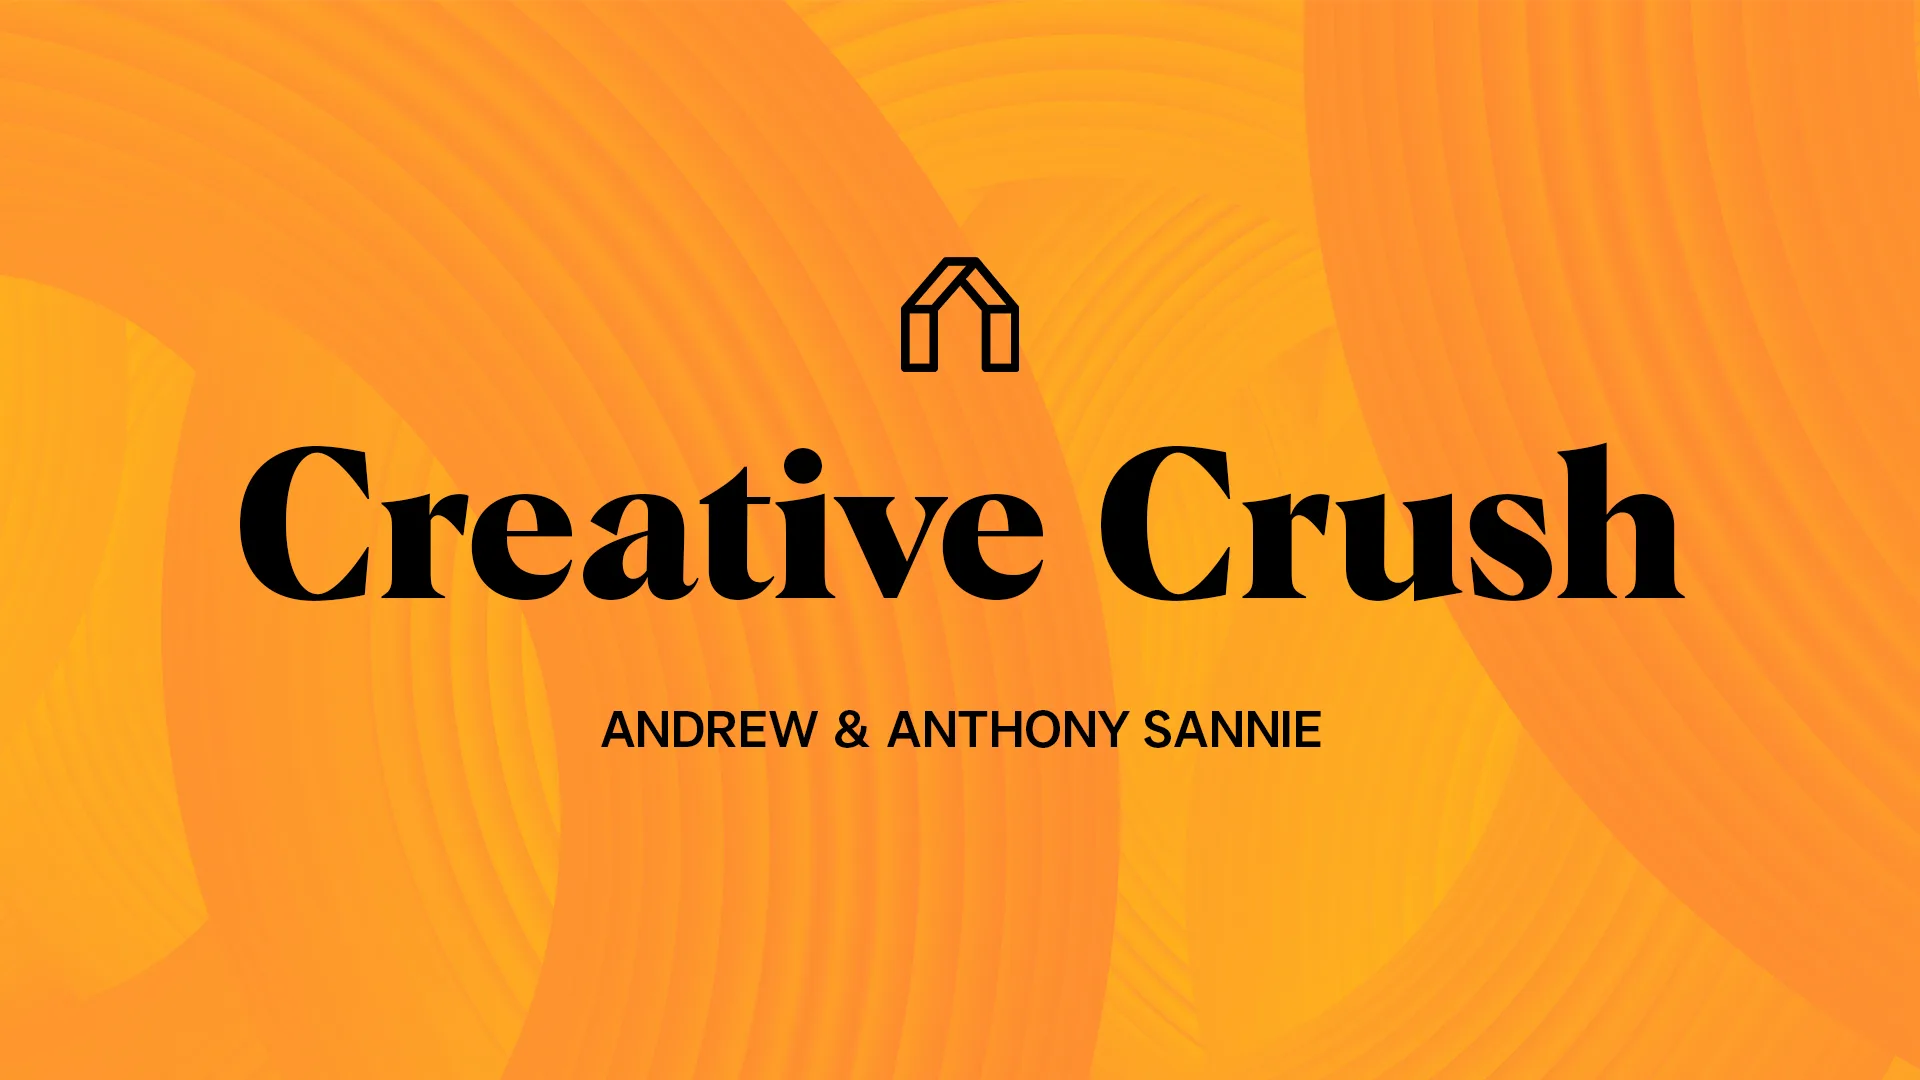 Creative Crush Andrew & Anthony Sannie